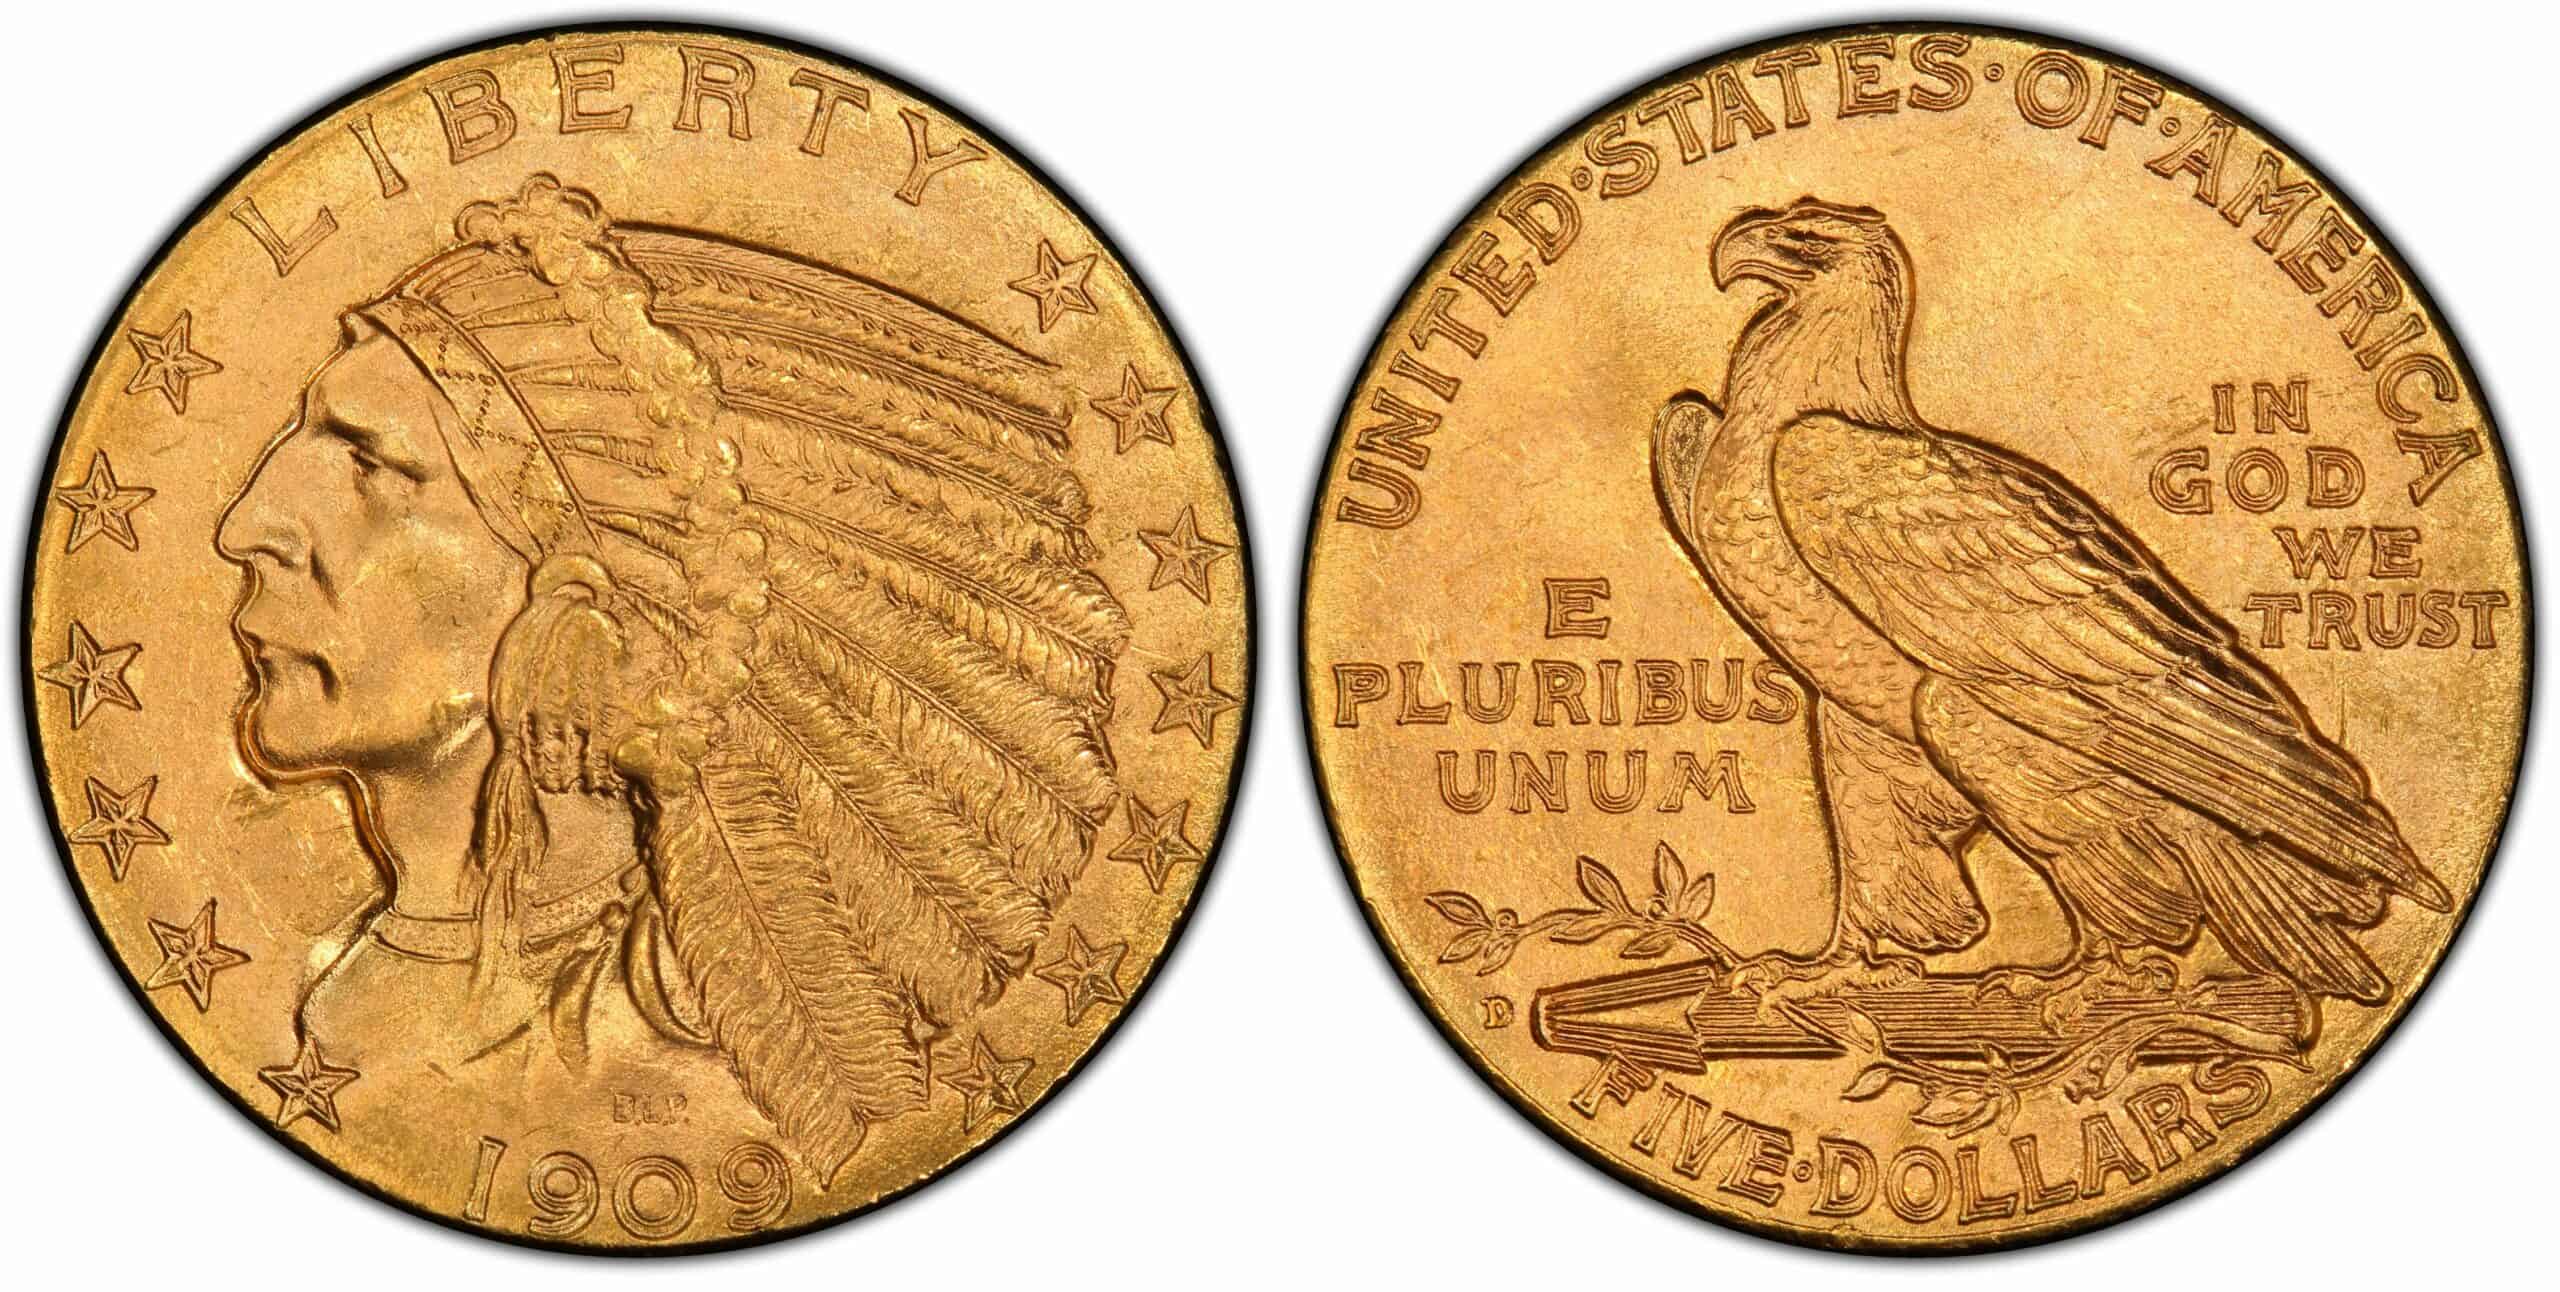 1909-D Indian $5 gold coin